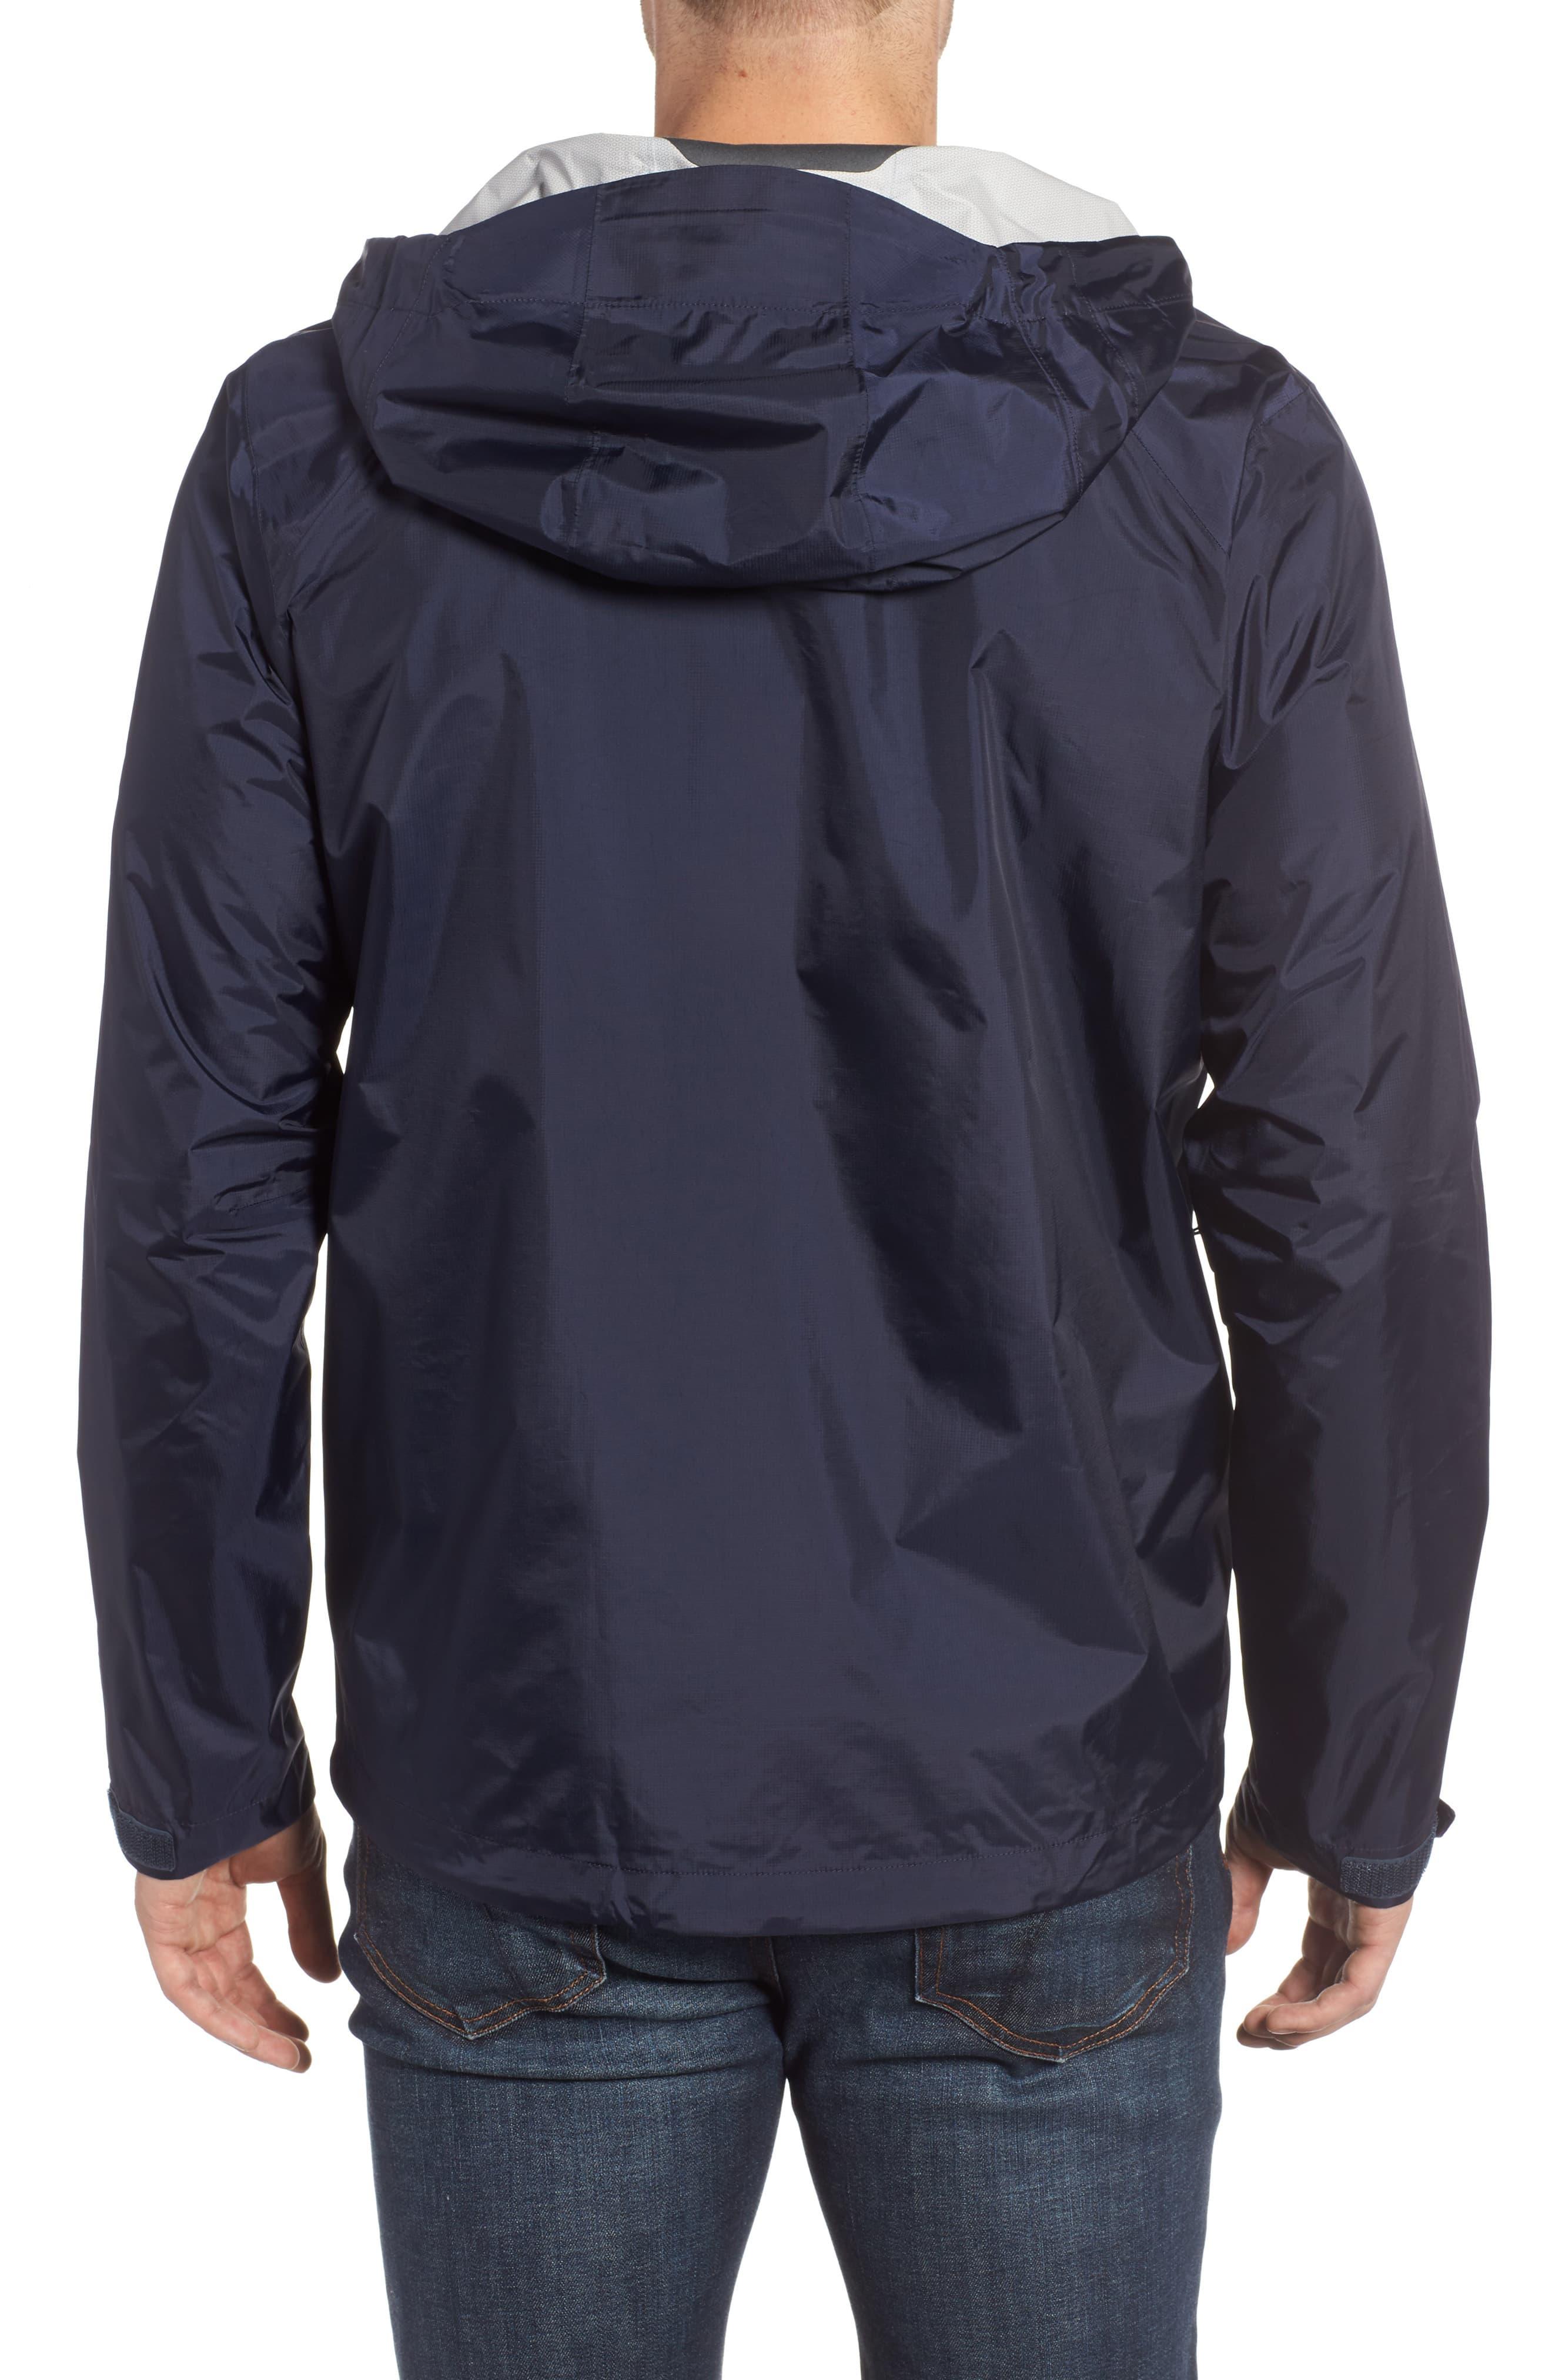 Patagonia Torrentshell Packable Rain Jacket in Navy (Blue) for Men - Lyst